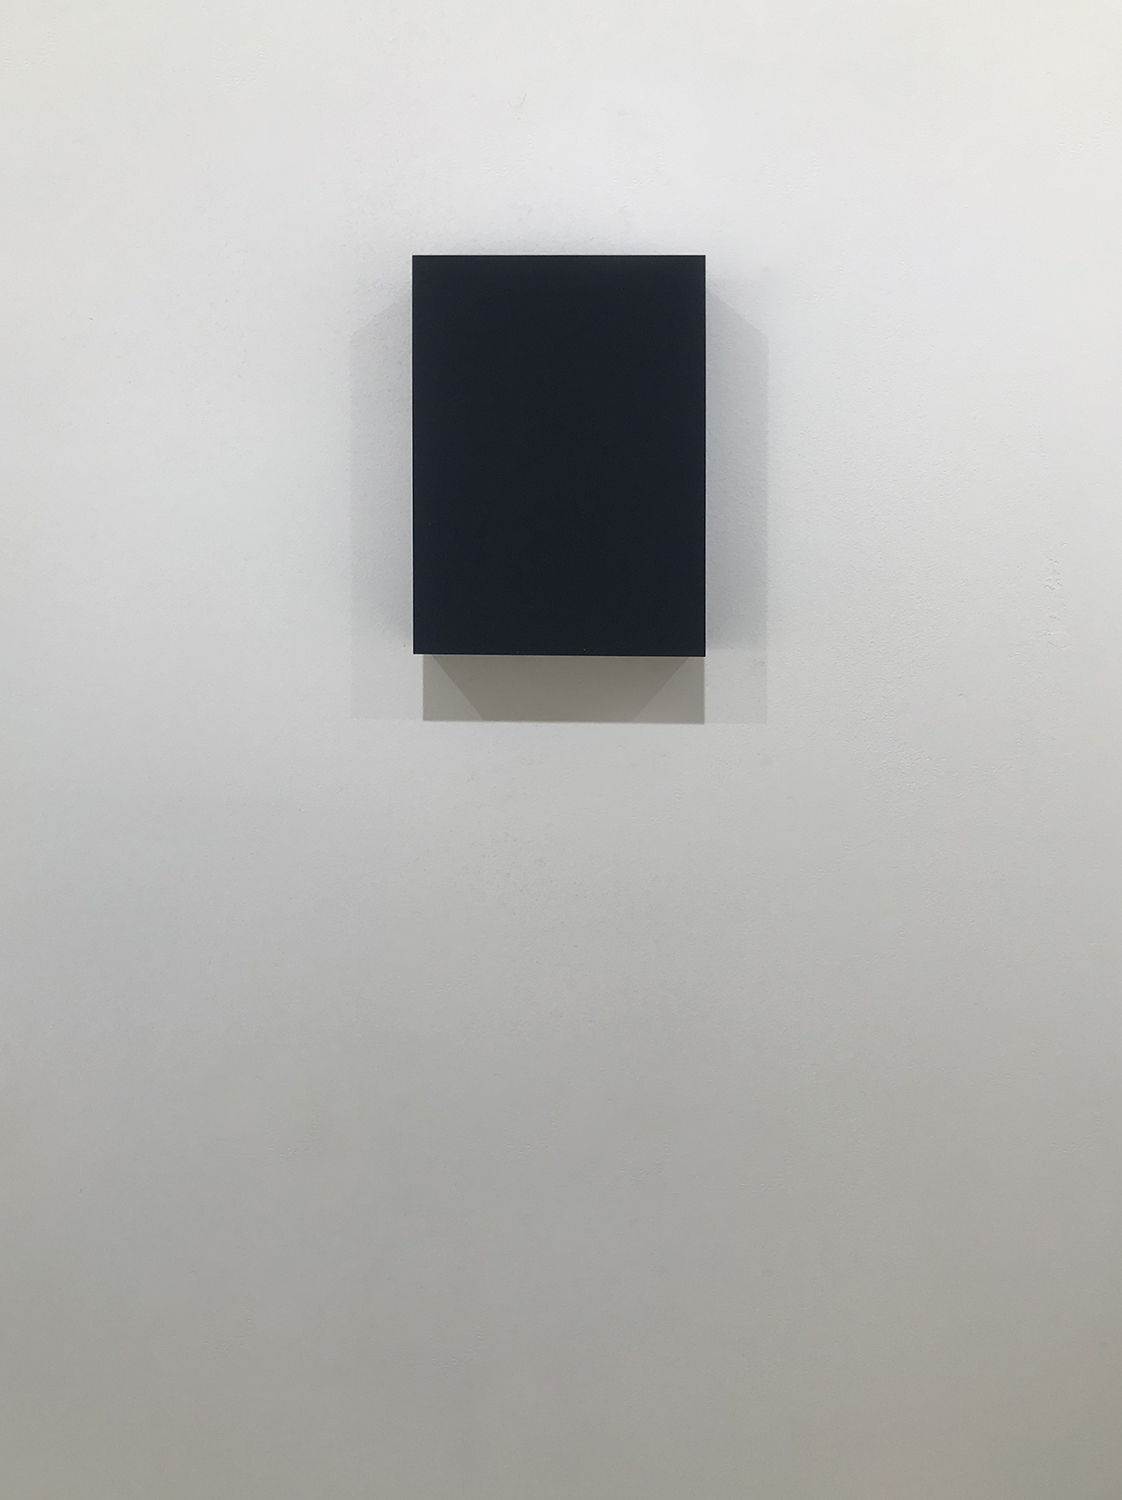 越野潤｜JUN KOSHINO<br>WORK16-3 (dark blue), silkscreen paint on perspex, 150 x 100 x 50 mm, 2016